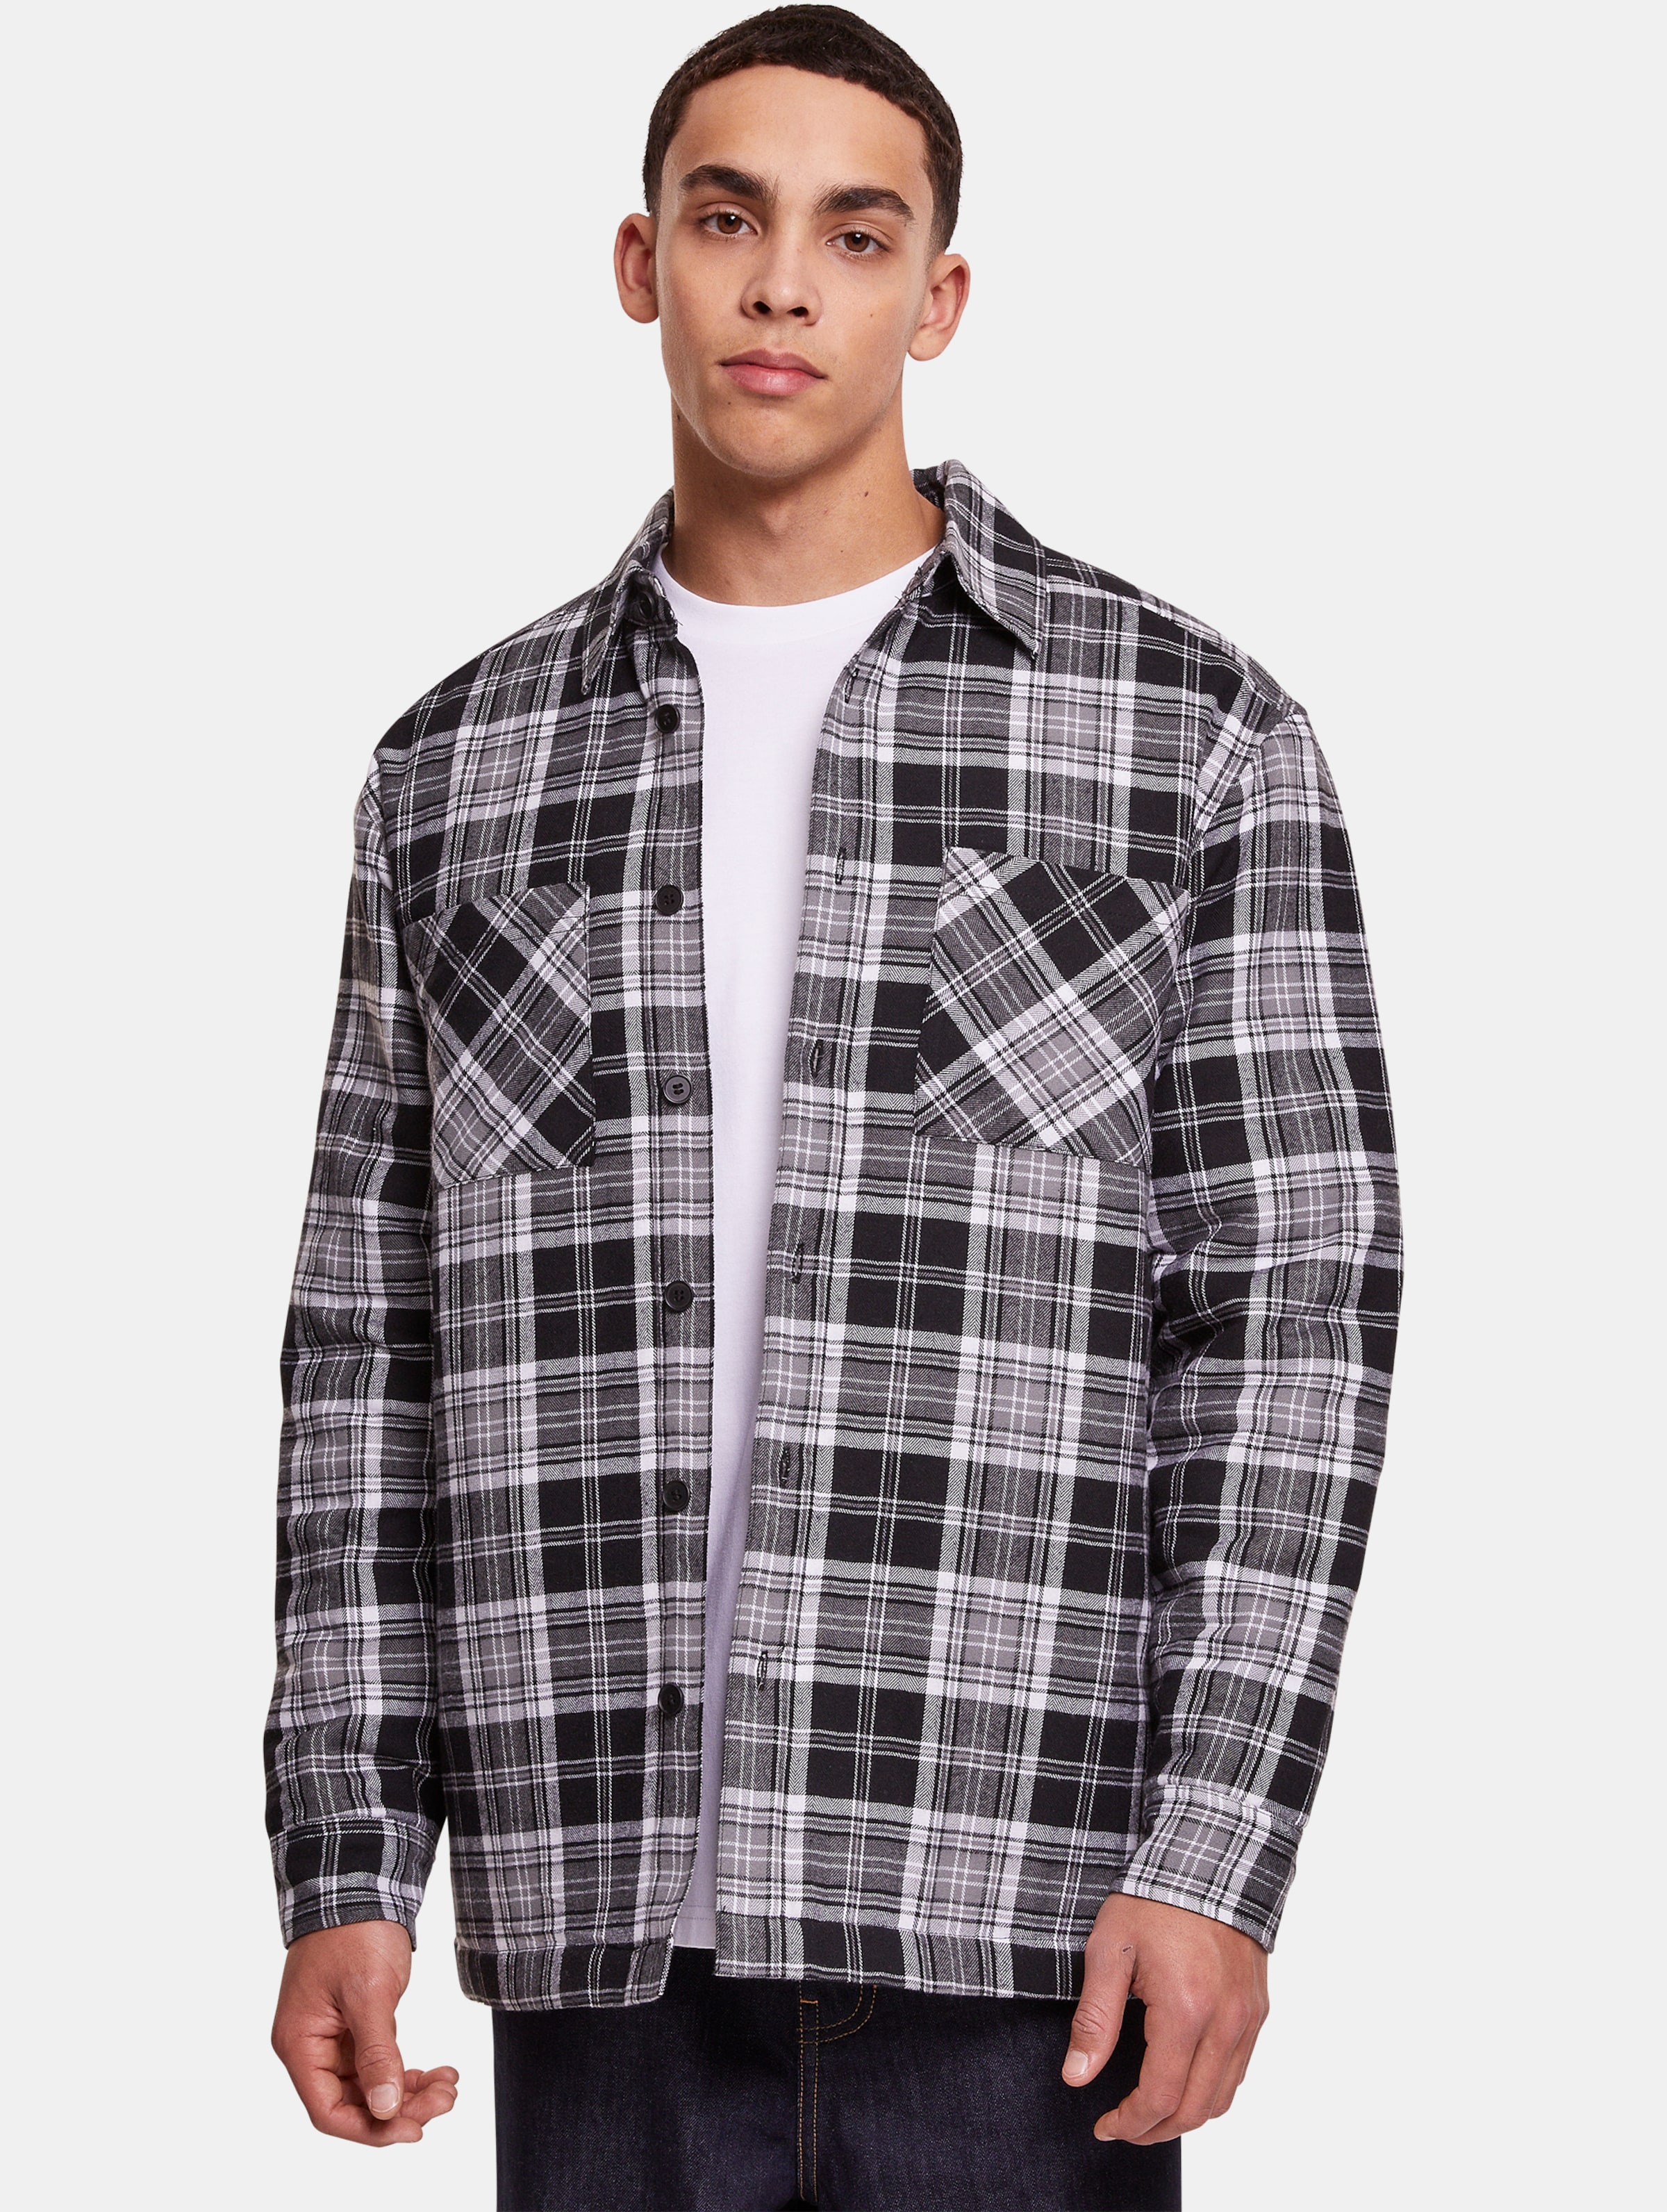 Urban Classics - Padded Checked Shirt Jacket Overhemd - 3XL - Zwart/Wit